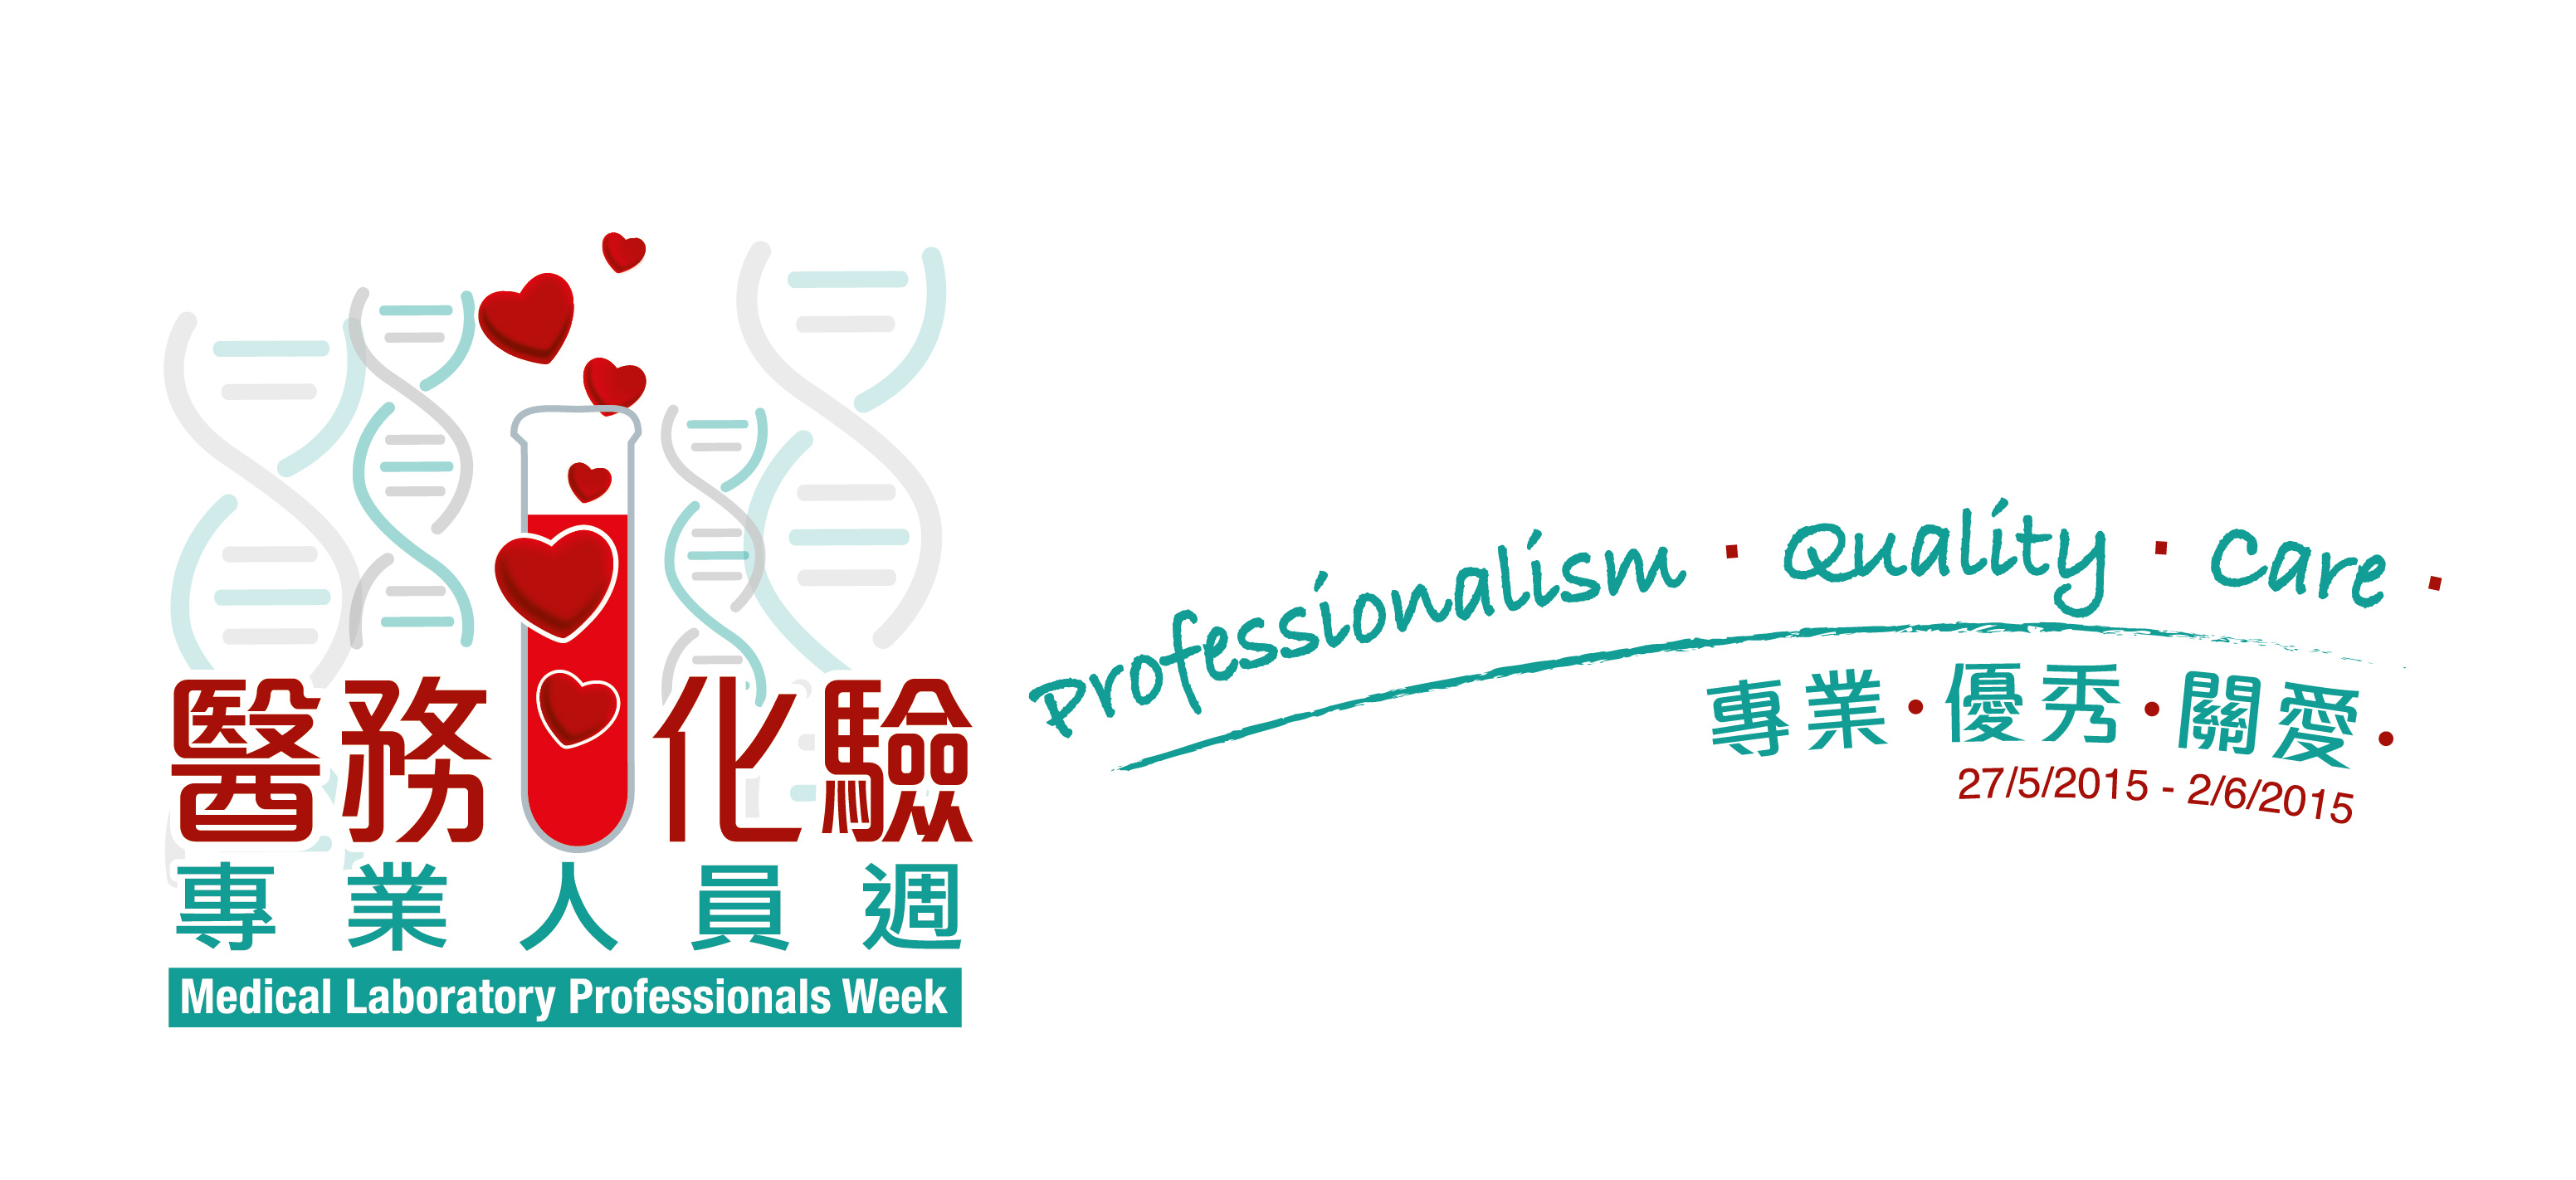 MLPW logo slogan Chi Eng 2015